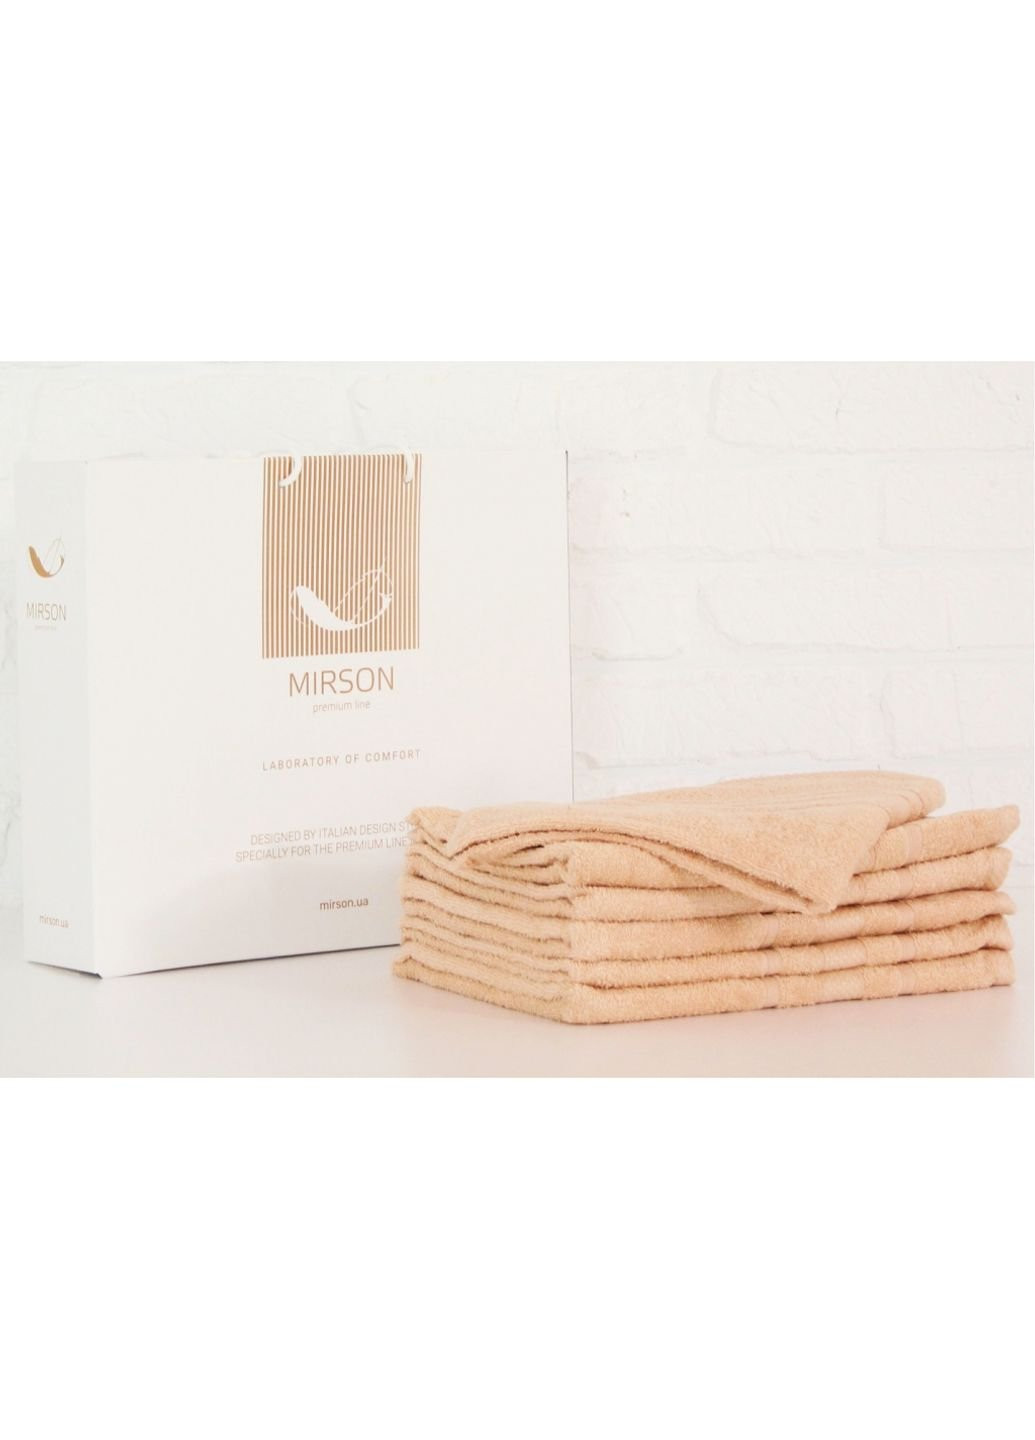 No Brand полотенце mirson набор банных №5075 elite softness ivory 50х90 6 шт (2200003523997) молочный производство - Украина